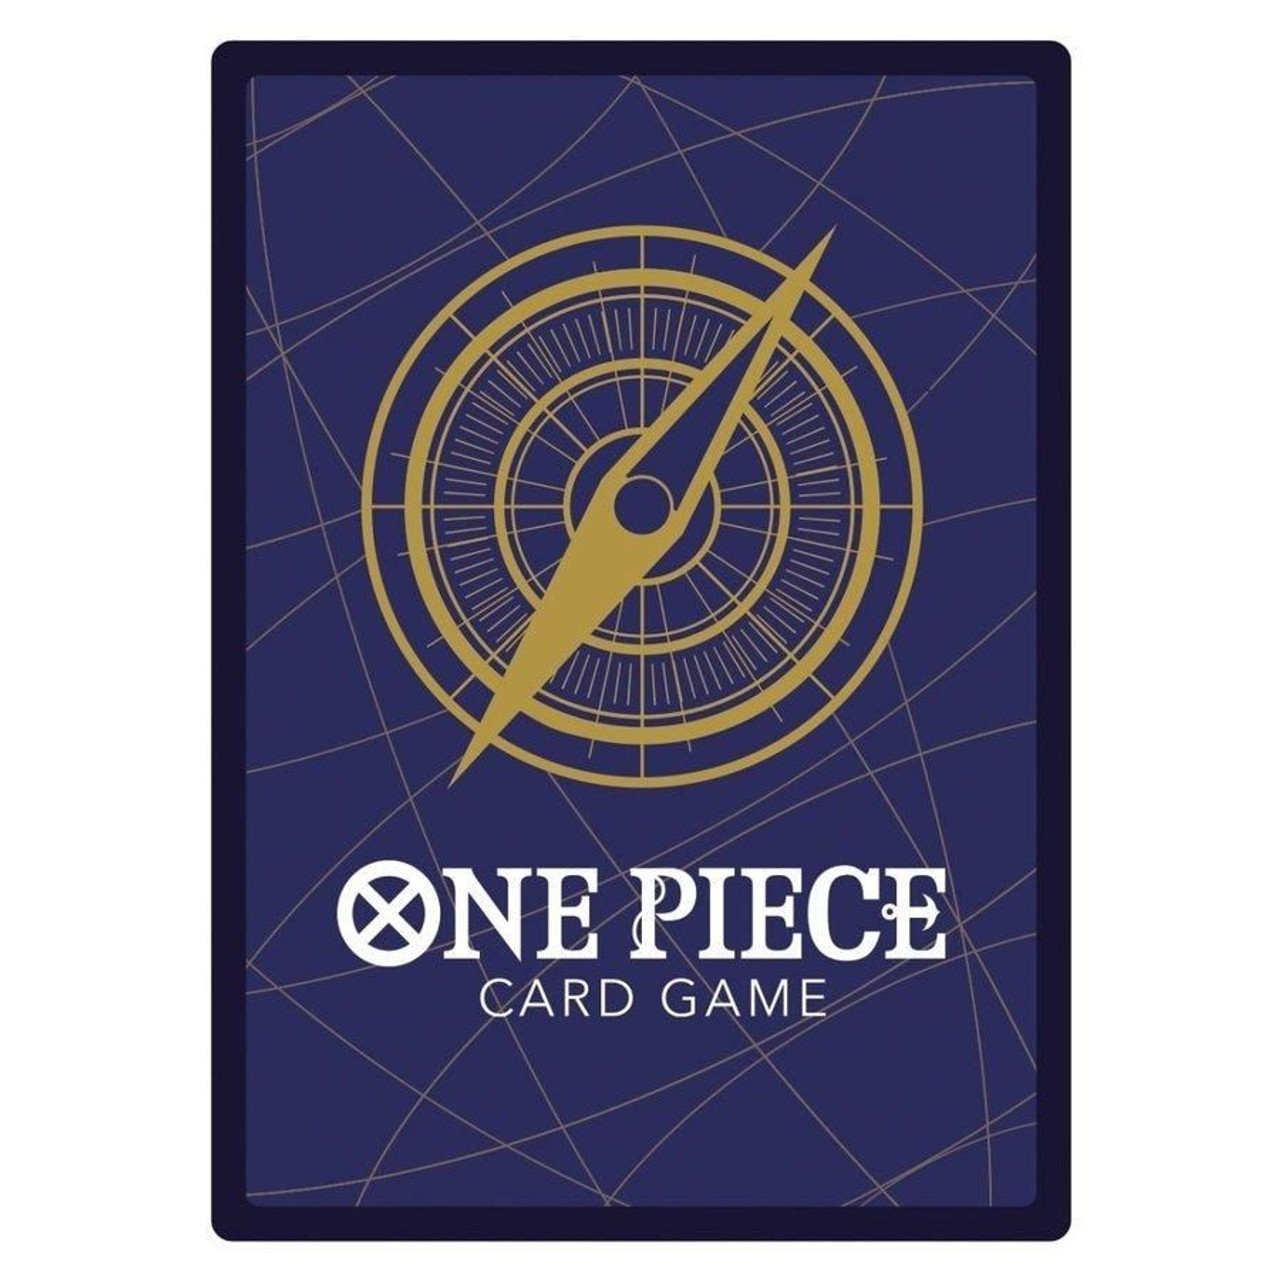 Bandai One Piece Card Game Romance Dawn [Op-01] (Box)